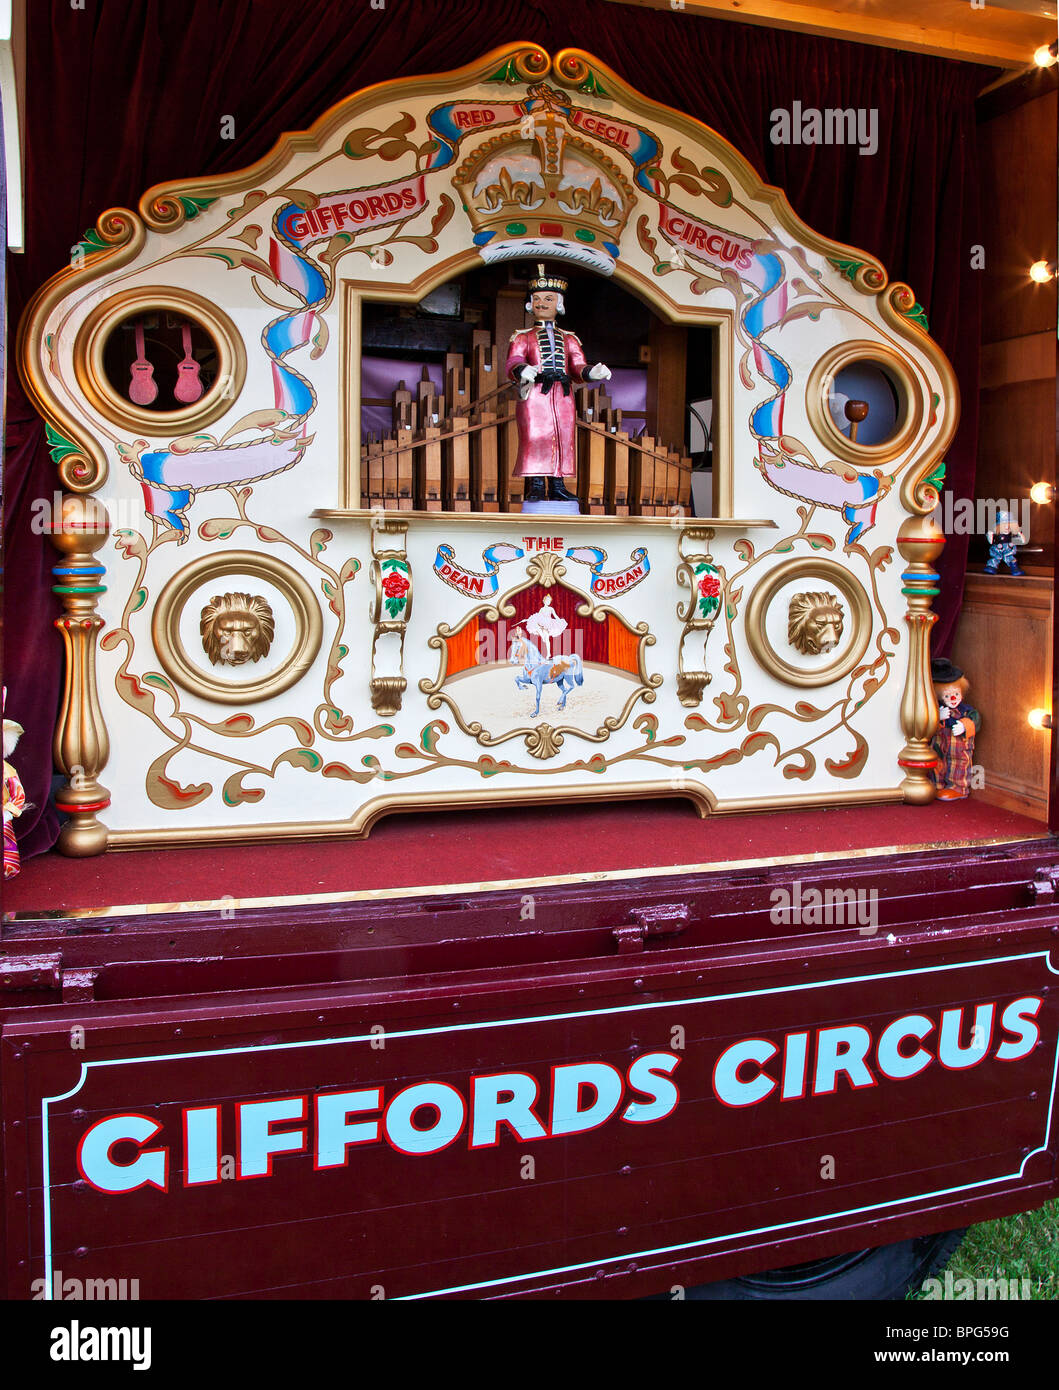 Old traditional barrel organ belonging to Giffords Circus Stock Photo